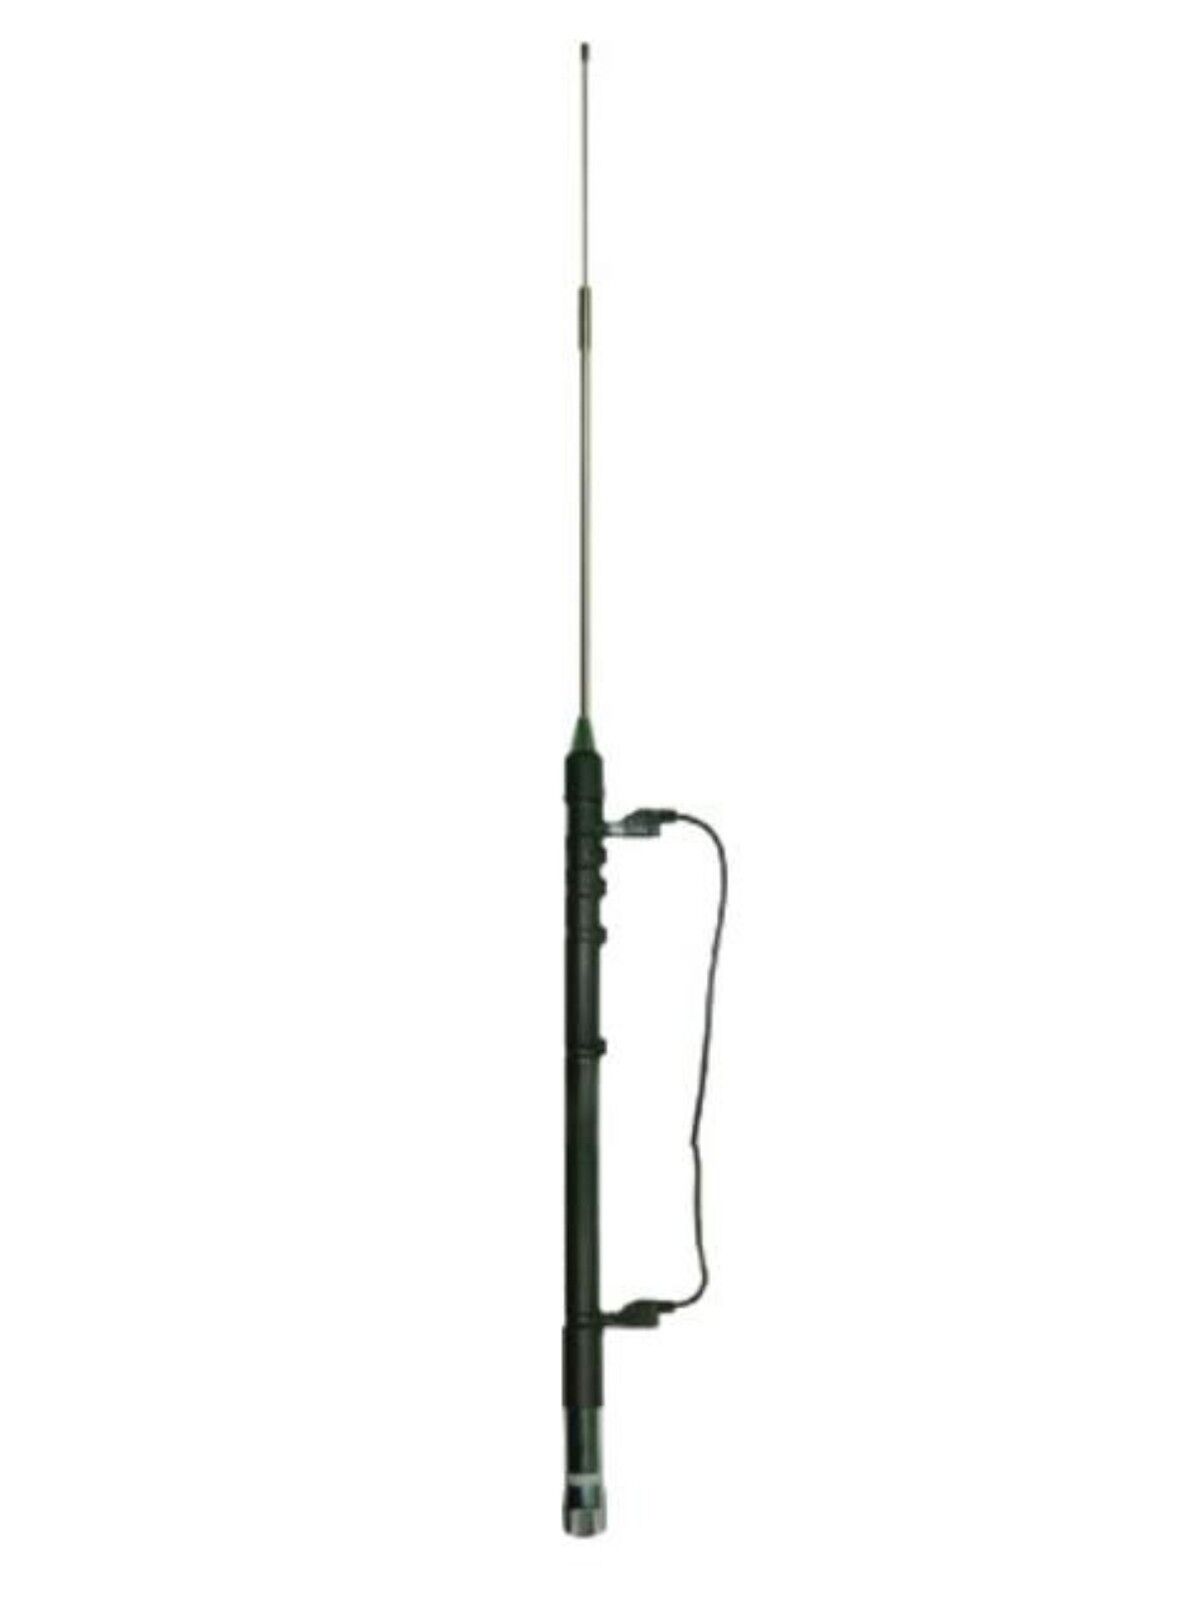 OPEK HVT-400B  HF/VHF/UHF MOBILE ANTENNA NICE PRICE  3YR WARR